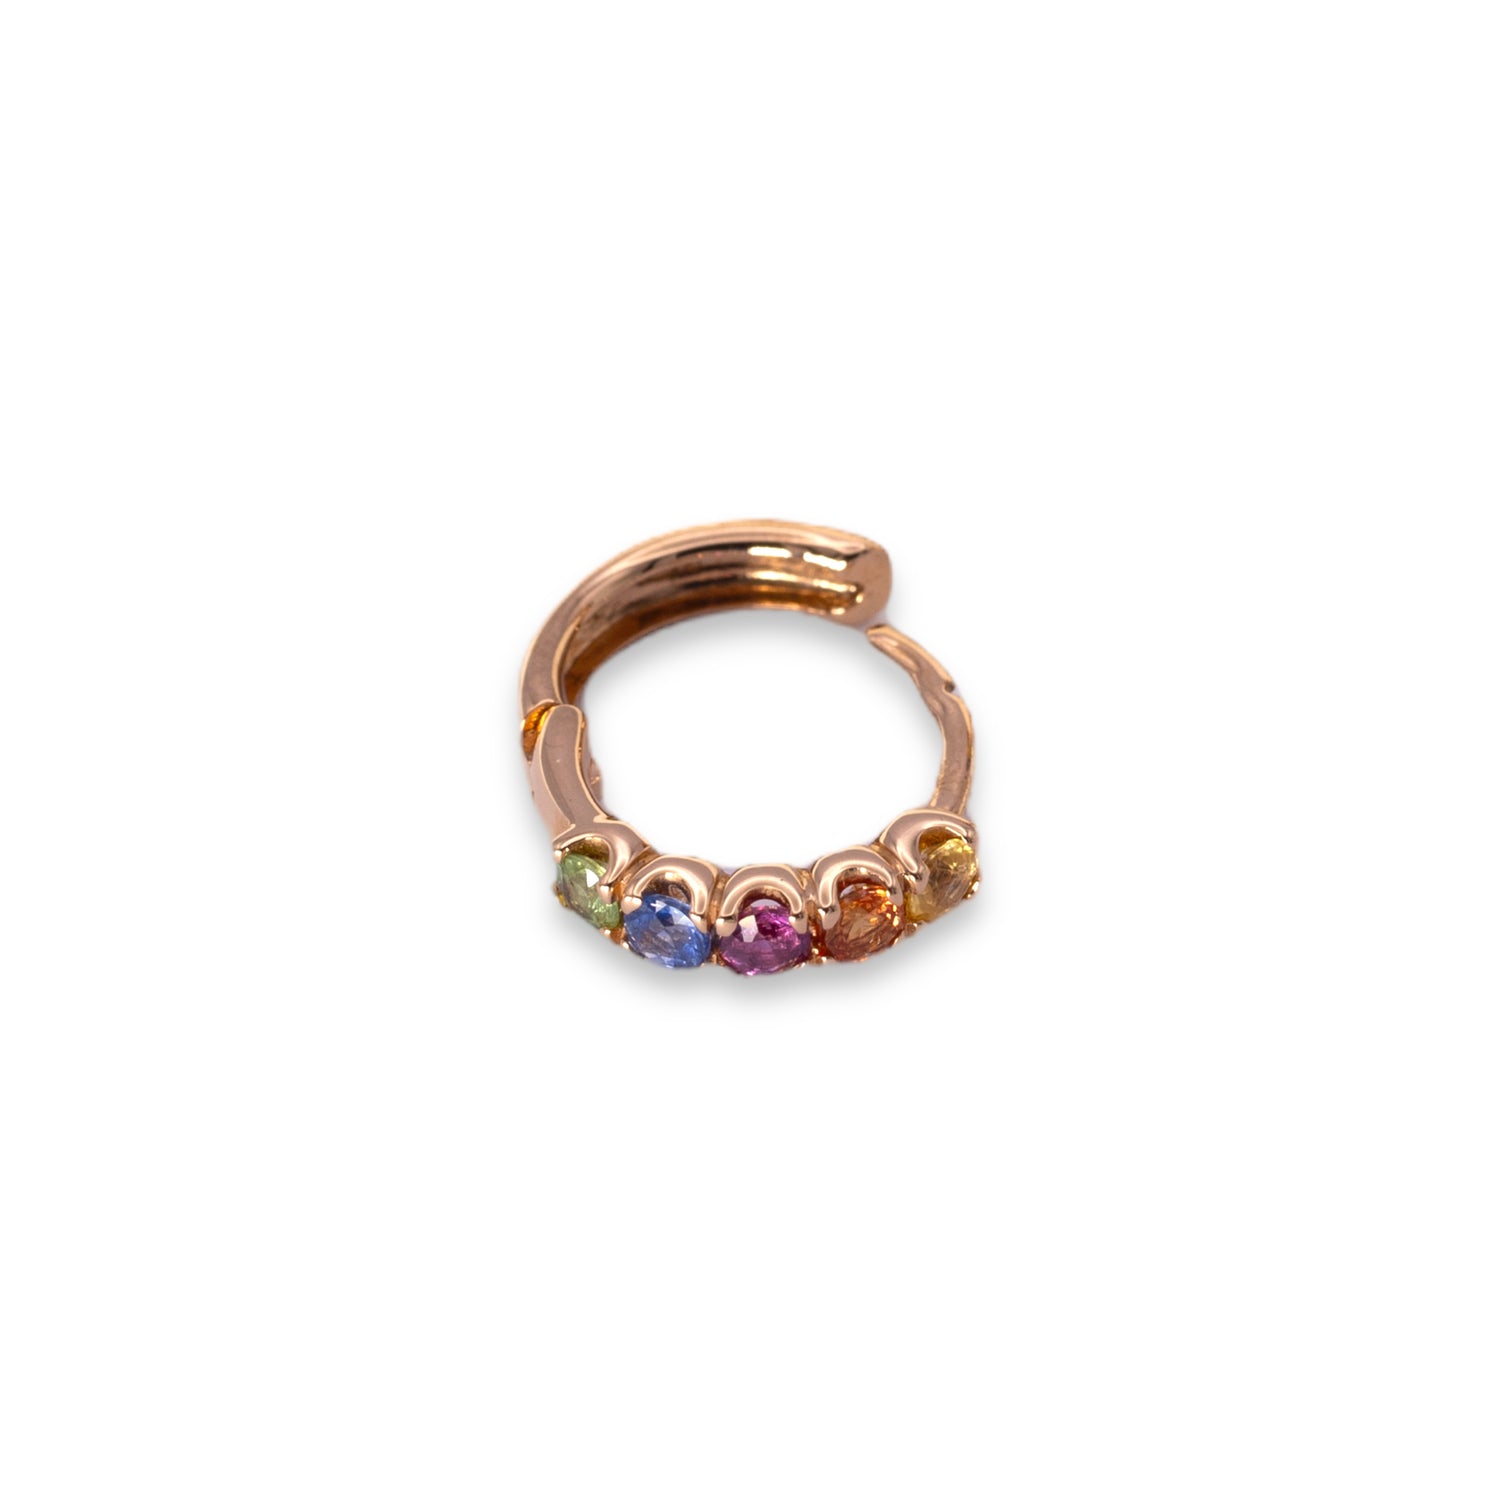 18K Gold Rainbow Earrings - 0.50 ct Sapphires